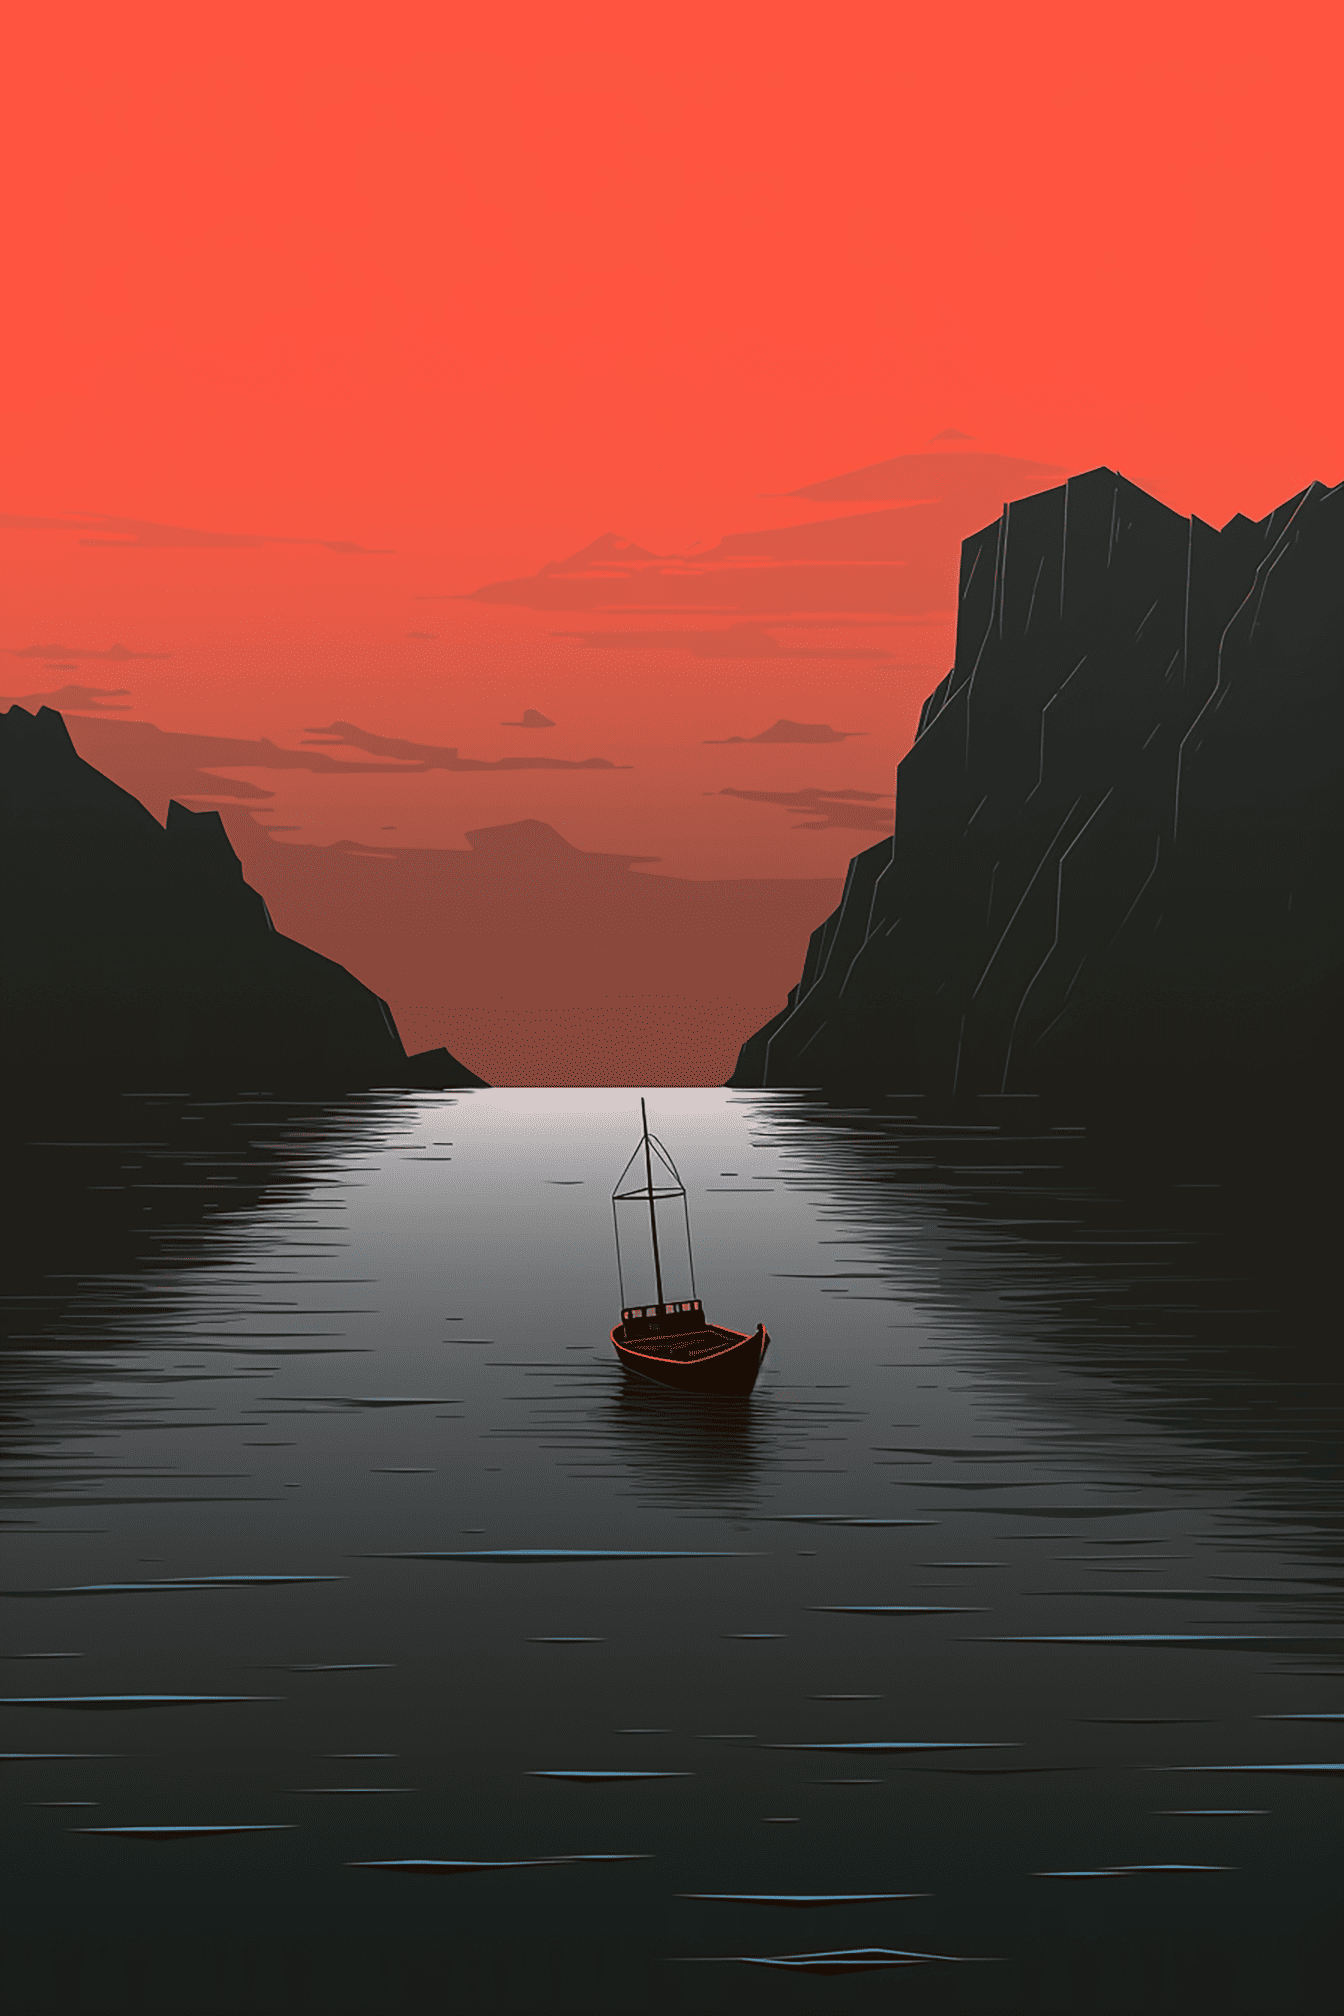 Векторная графика темно-красного заката в заливе с силуэтом рыбацкой лодки